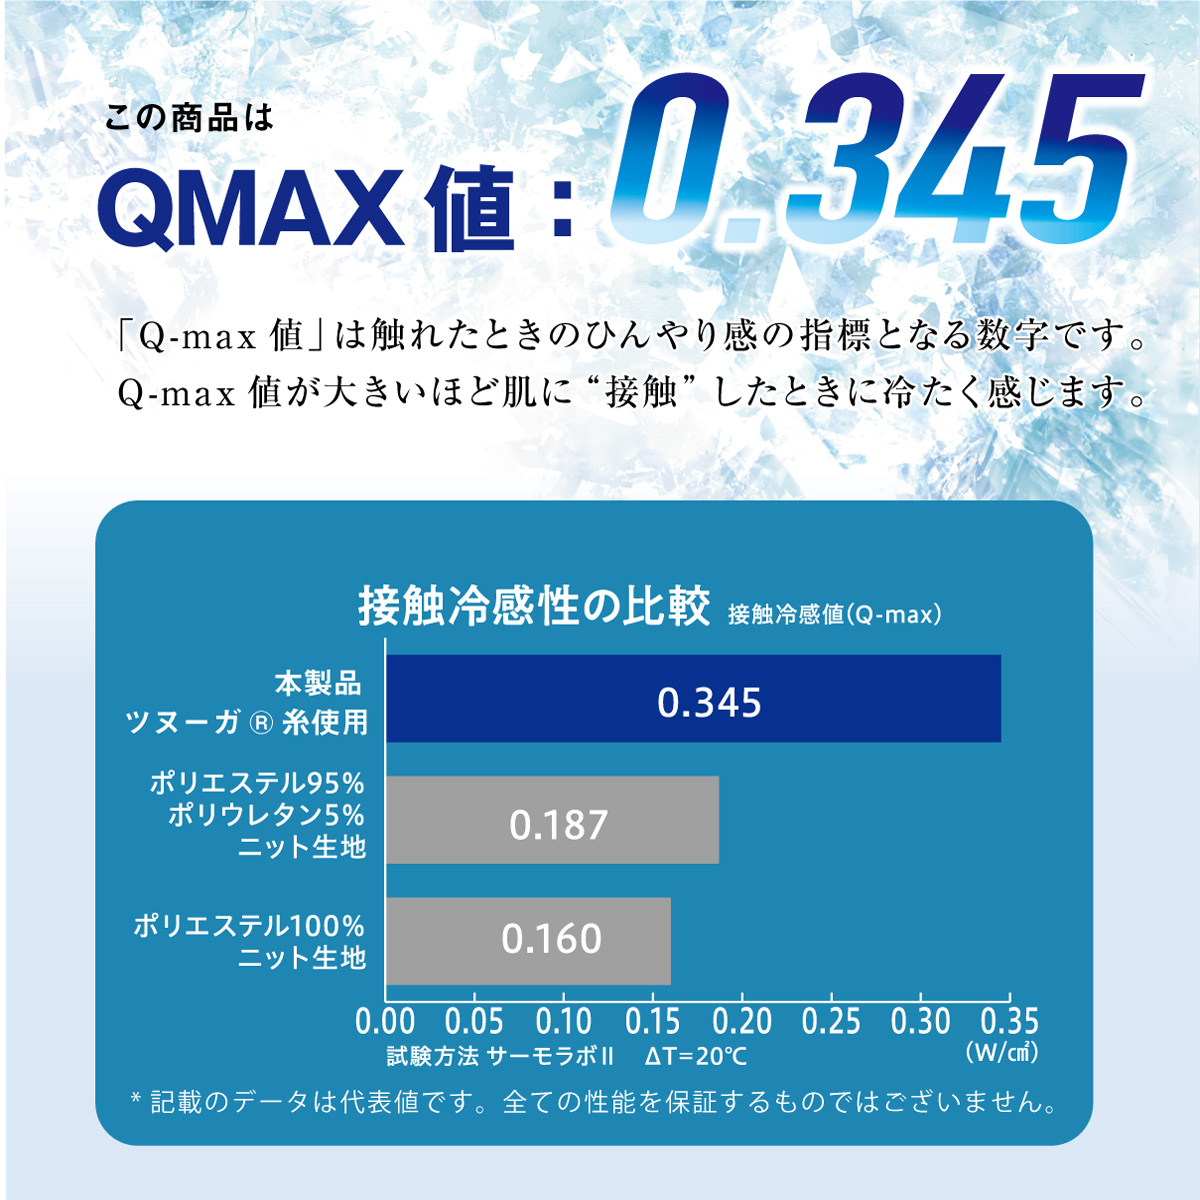 Q-maX値